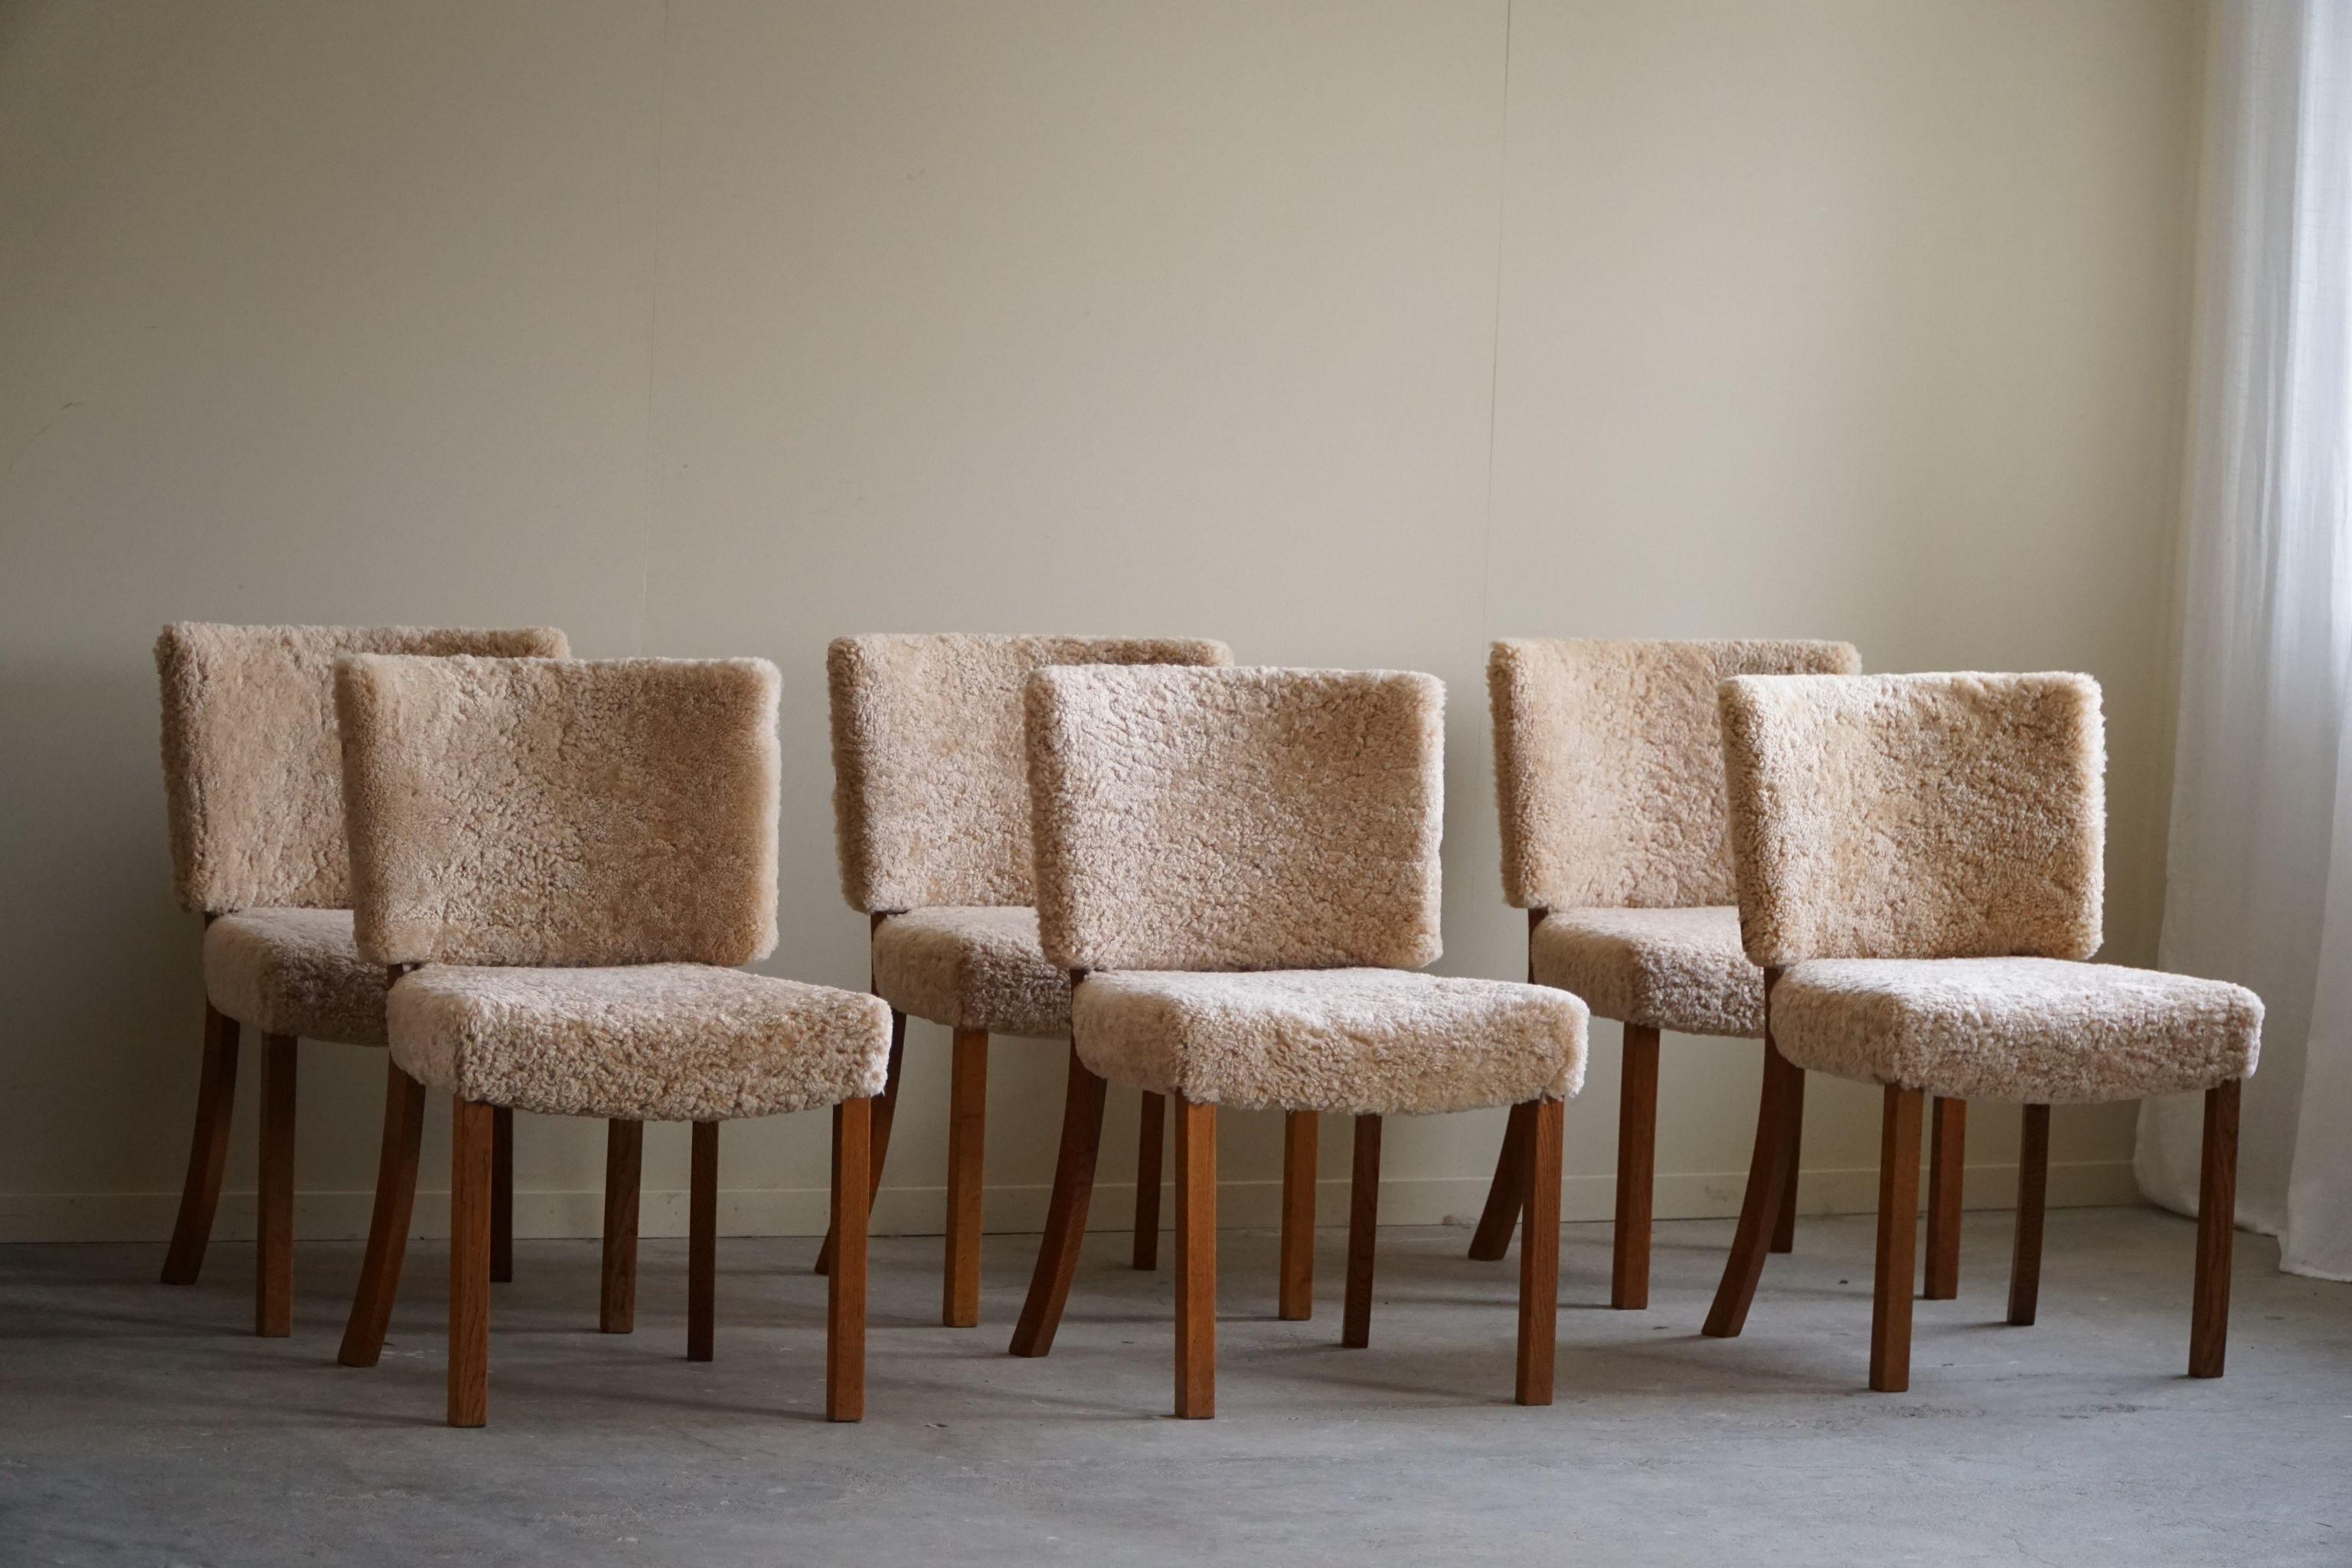 A set of 6 Dining Chairs in Oak and Lambswool, Danish Modern, Kaj Gottlob, 1950s For Sale 6